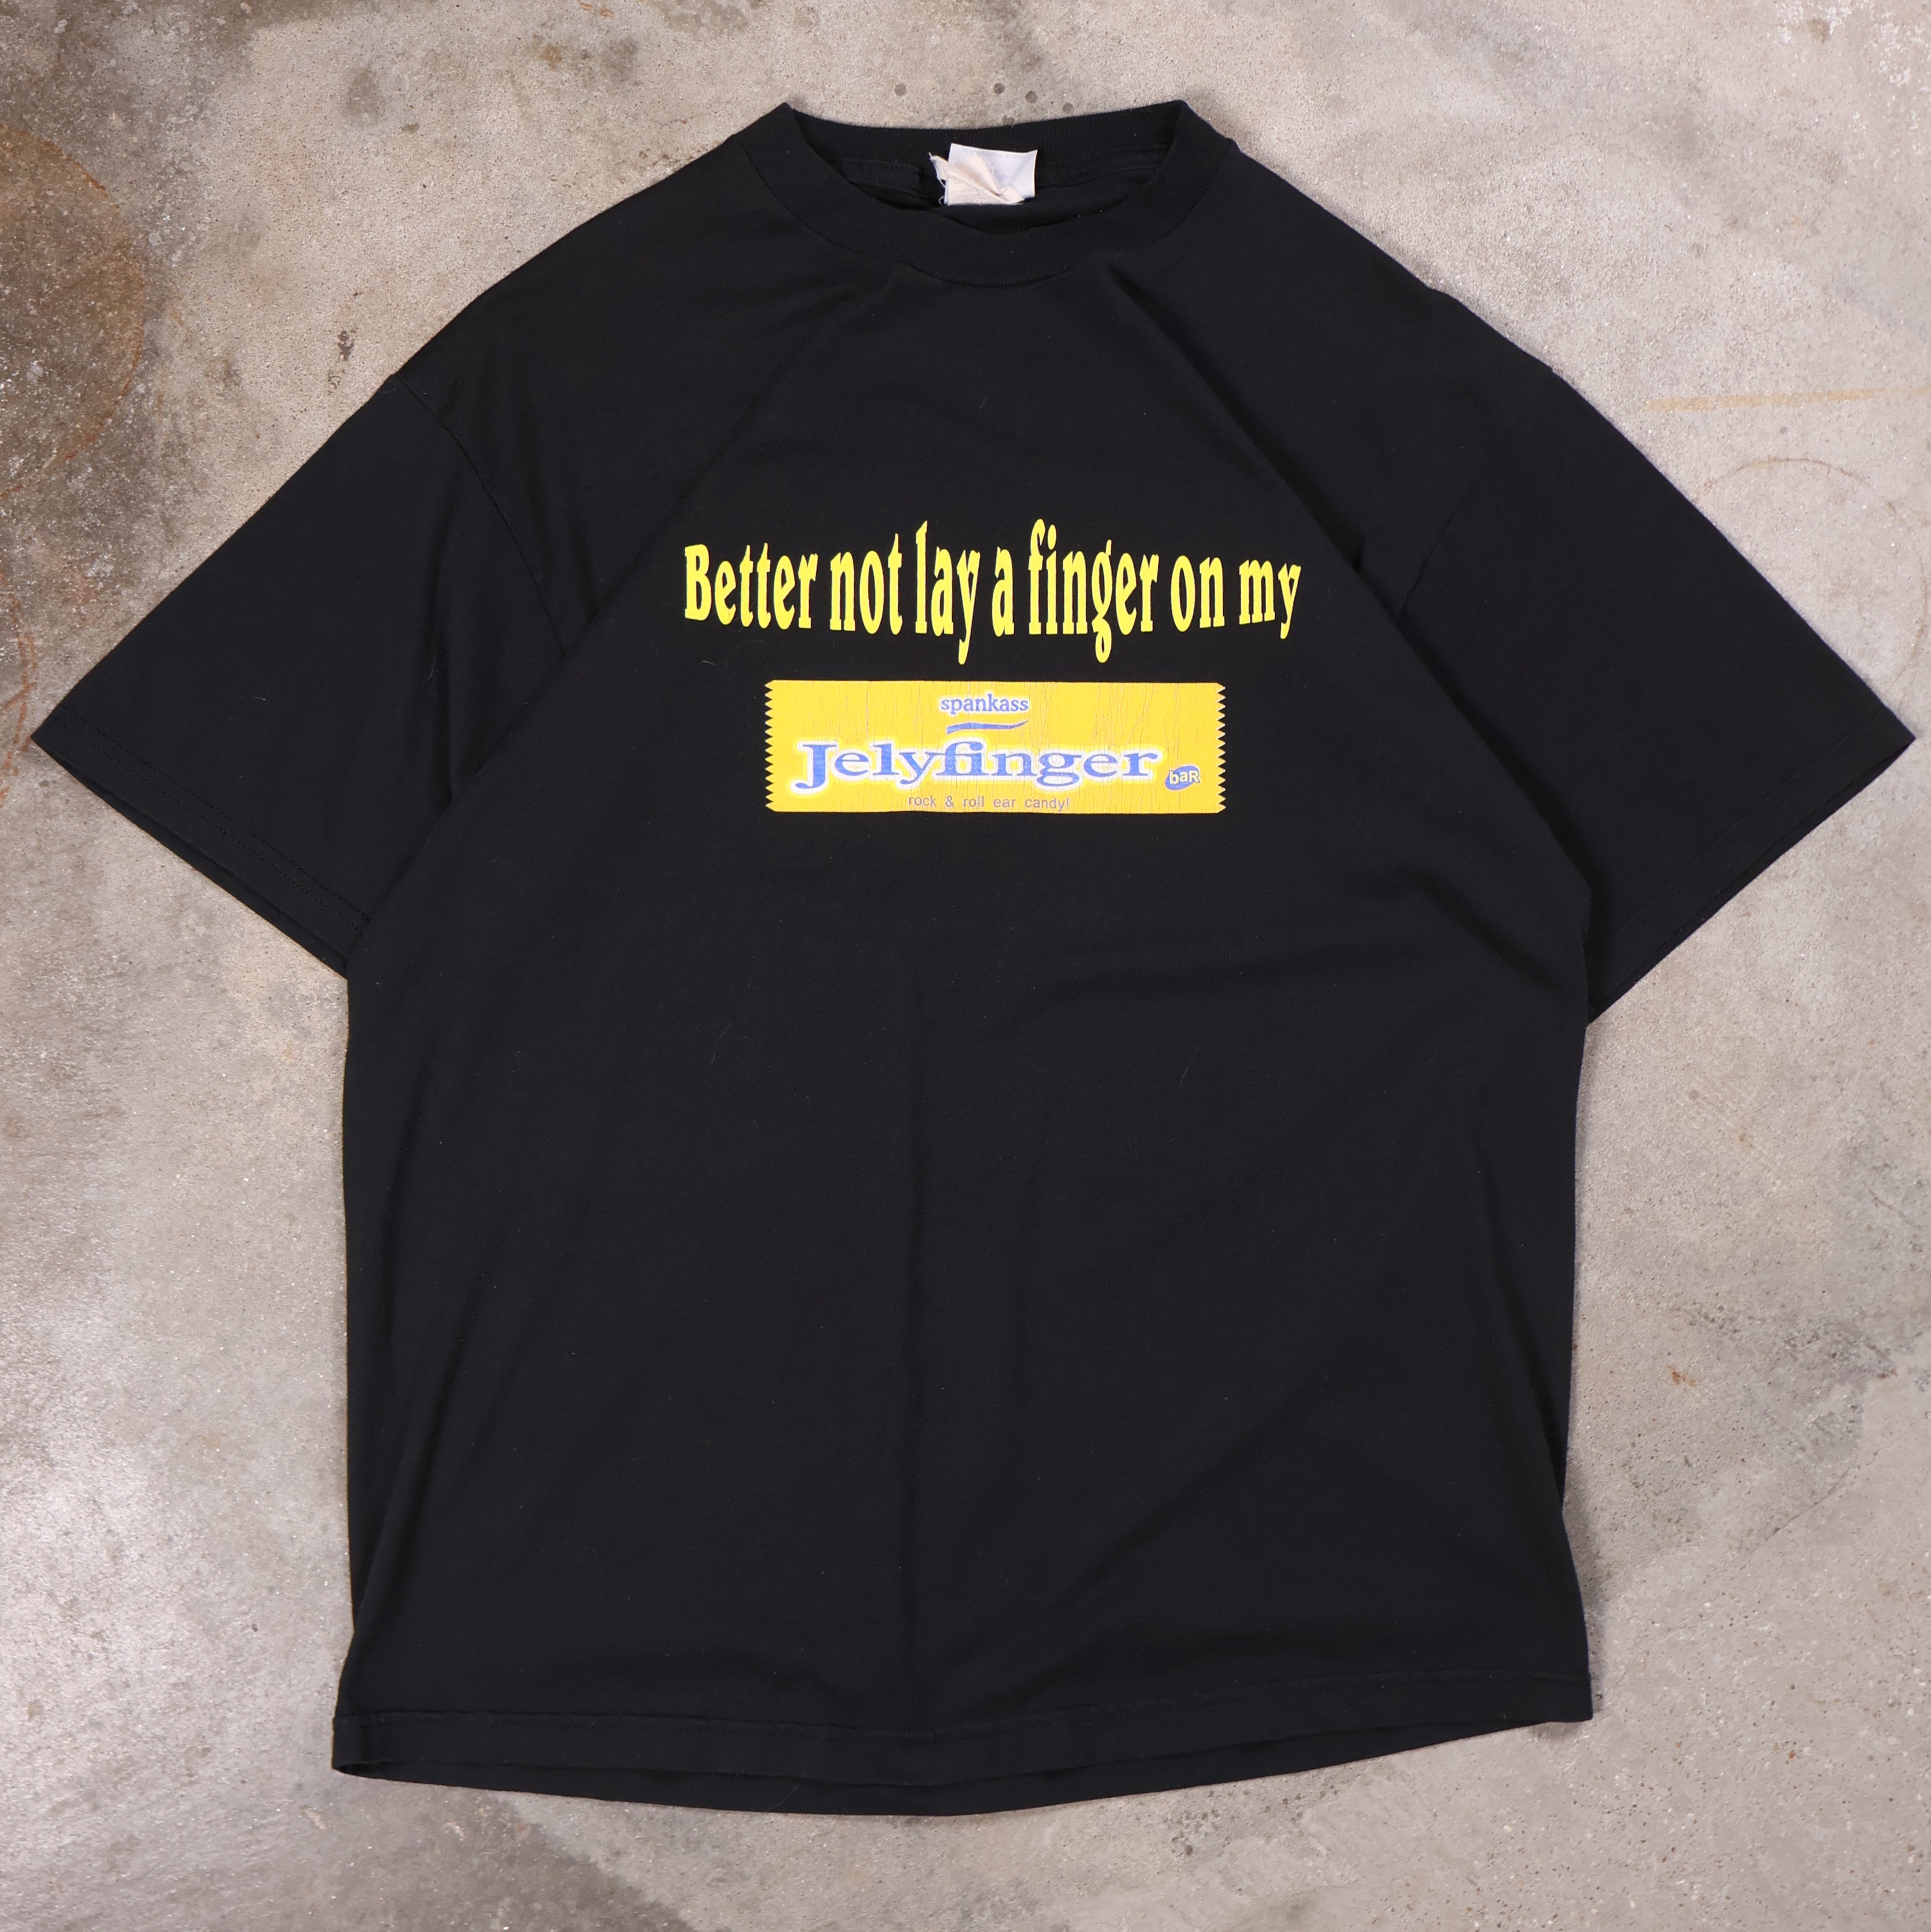 Butterfinger Parody T-Shirt 90s (Large)